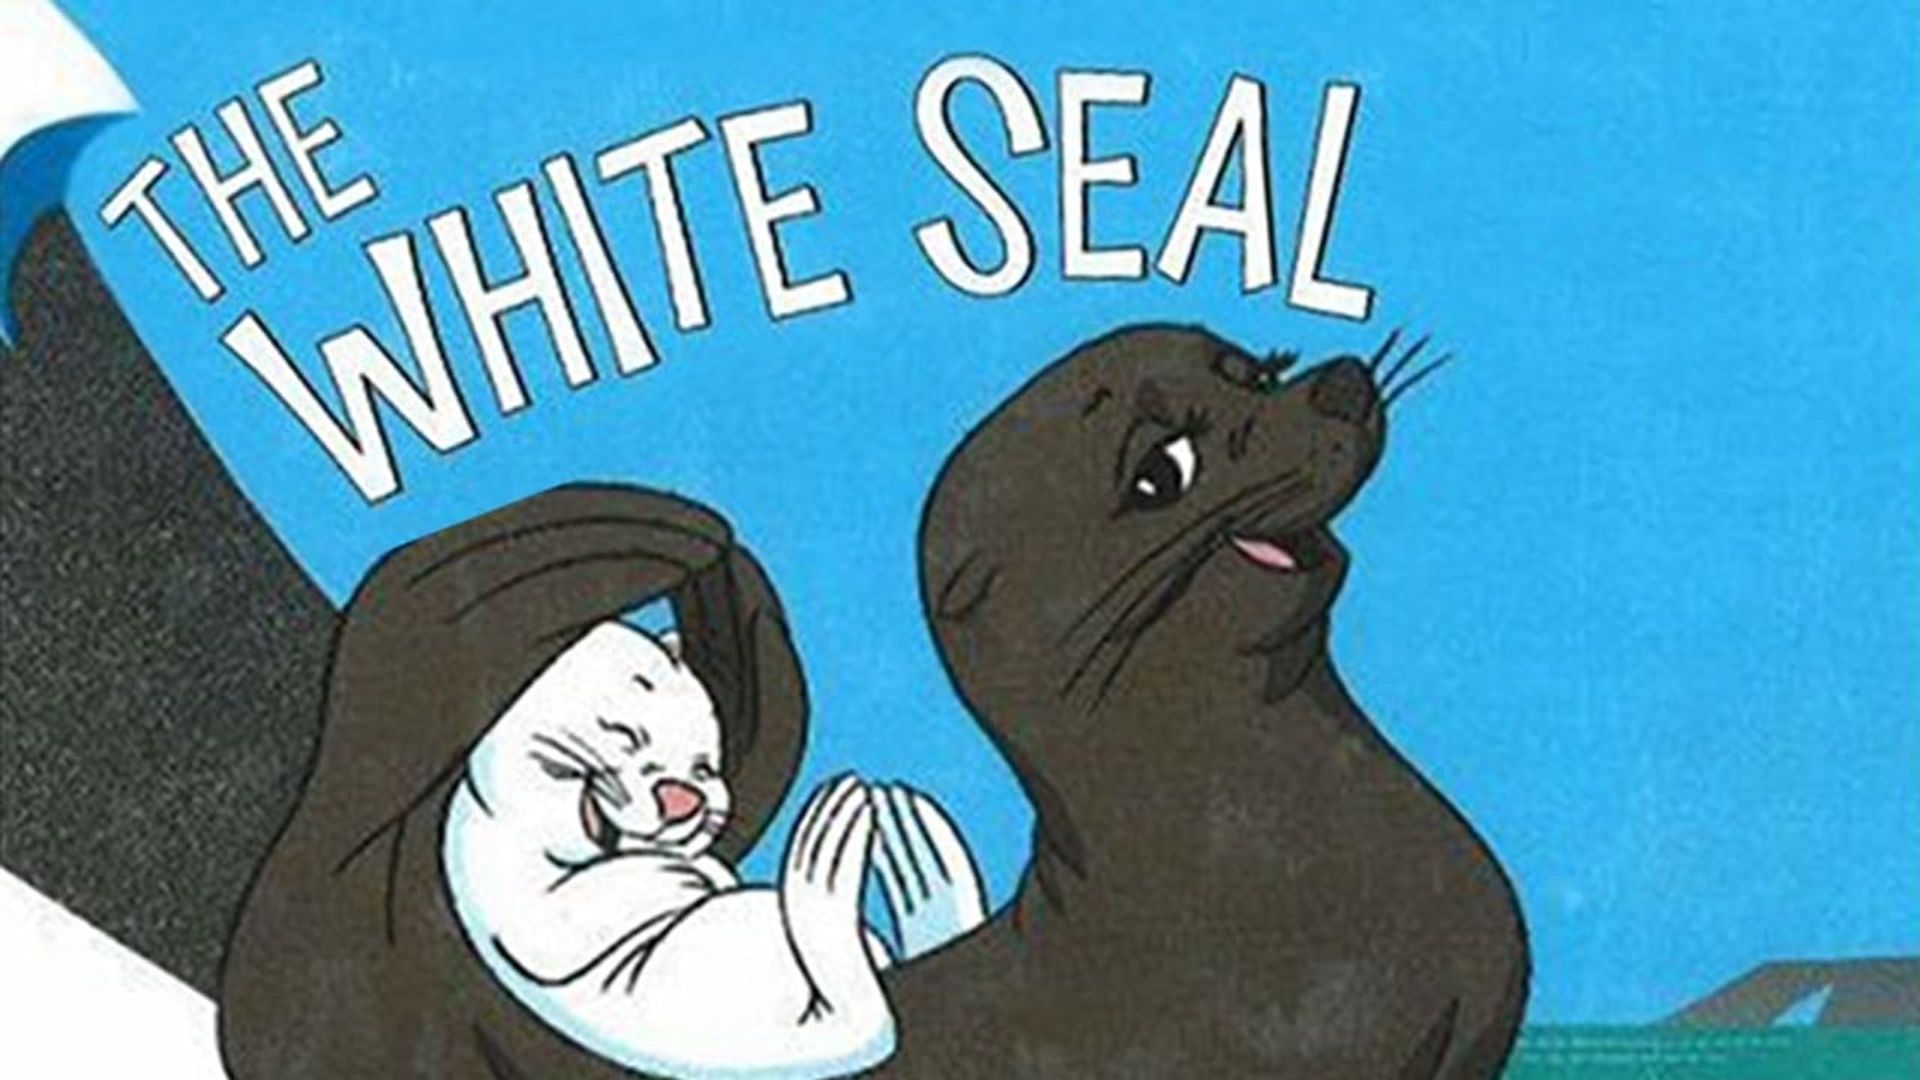 The White Seal Backdrop